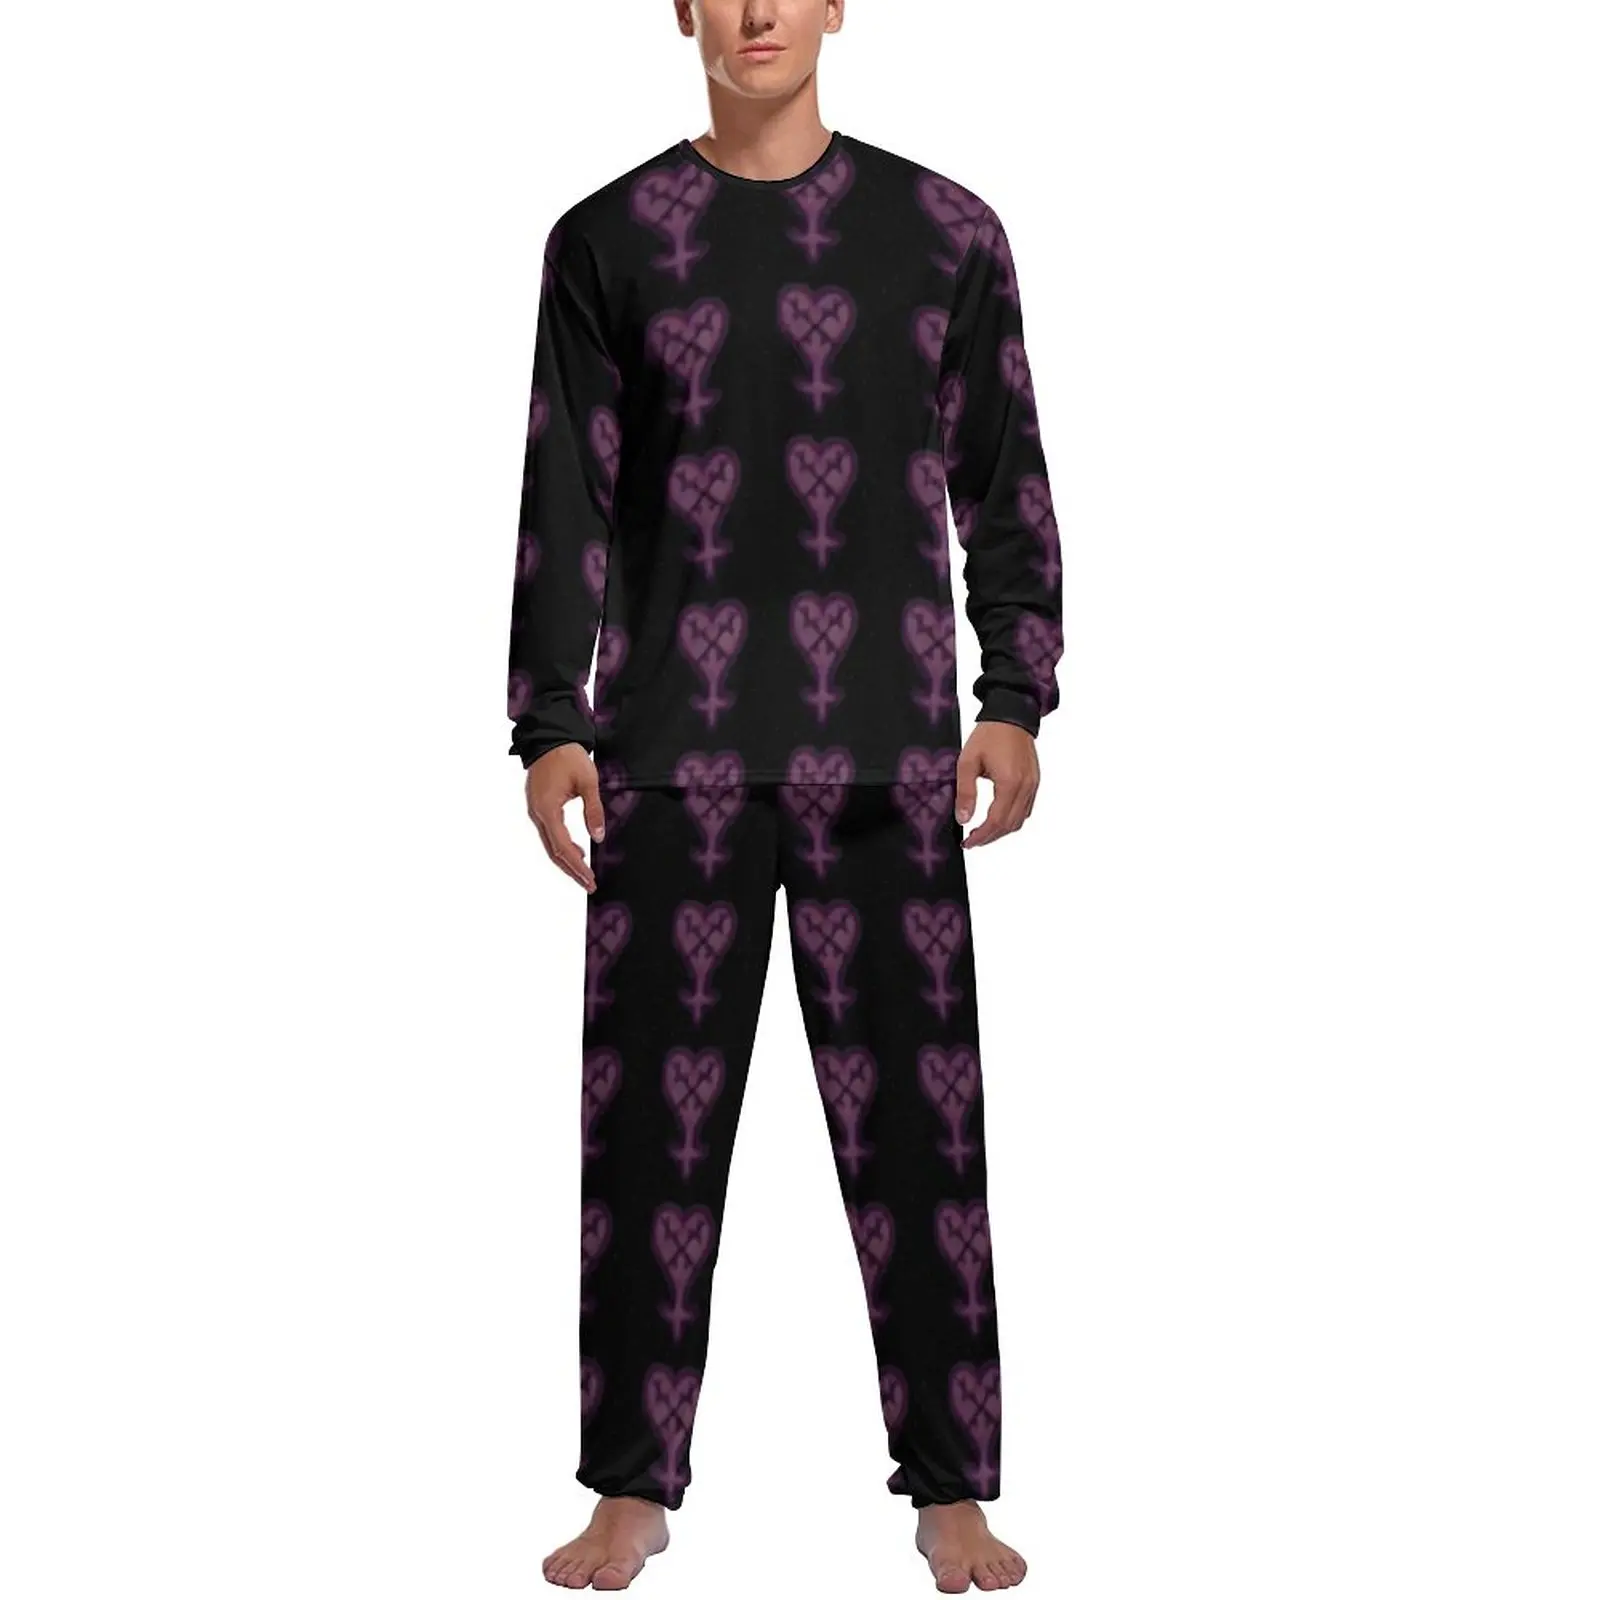 Kingdom Hearts Pajamas Long Sleeves Cosmic Heartless 2 Pieces Leisure Pajamas Set Daily Male Graphic Fashion Nightwear